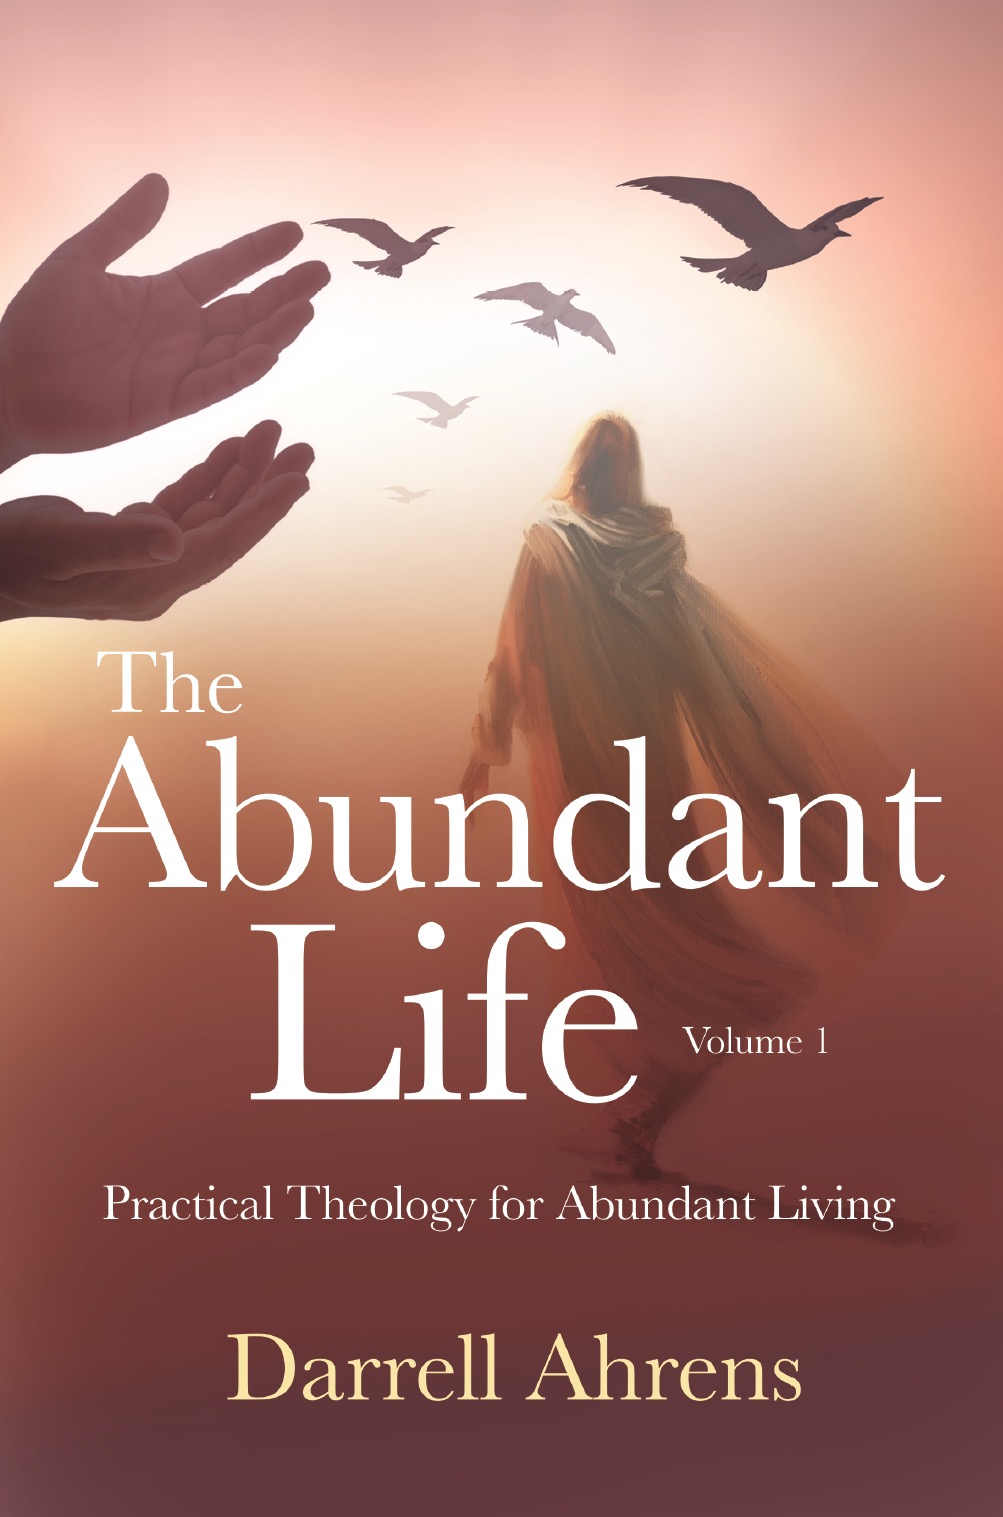 The Abundant Life: Practical Theology for Abundant Living